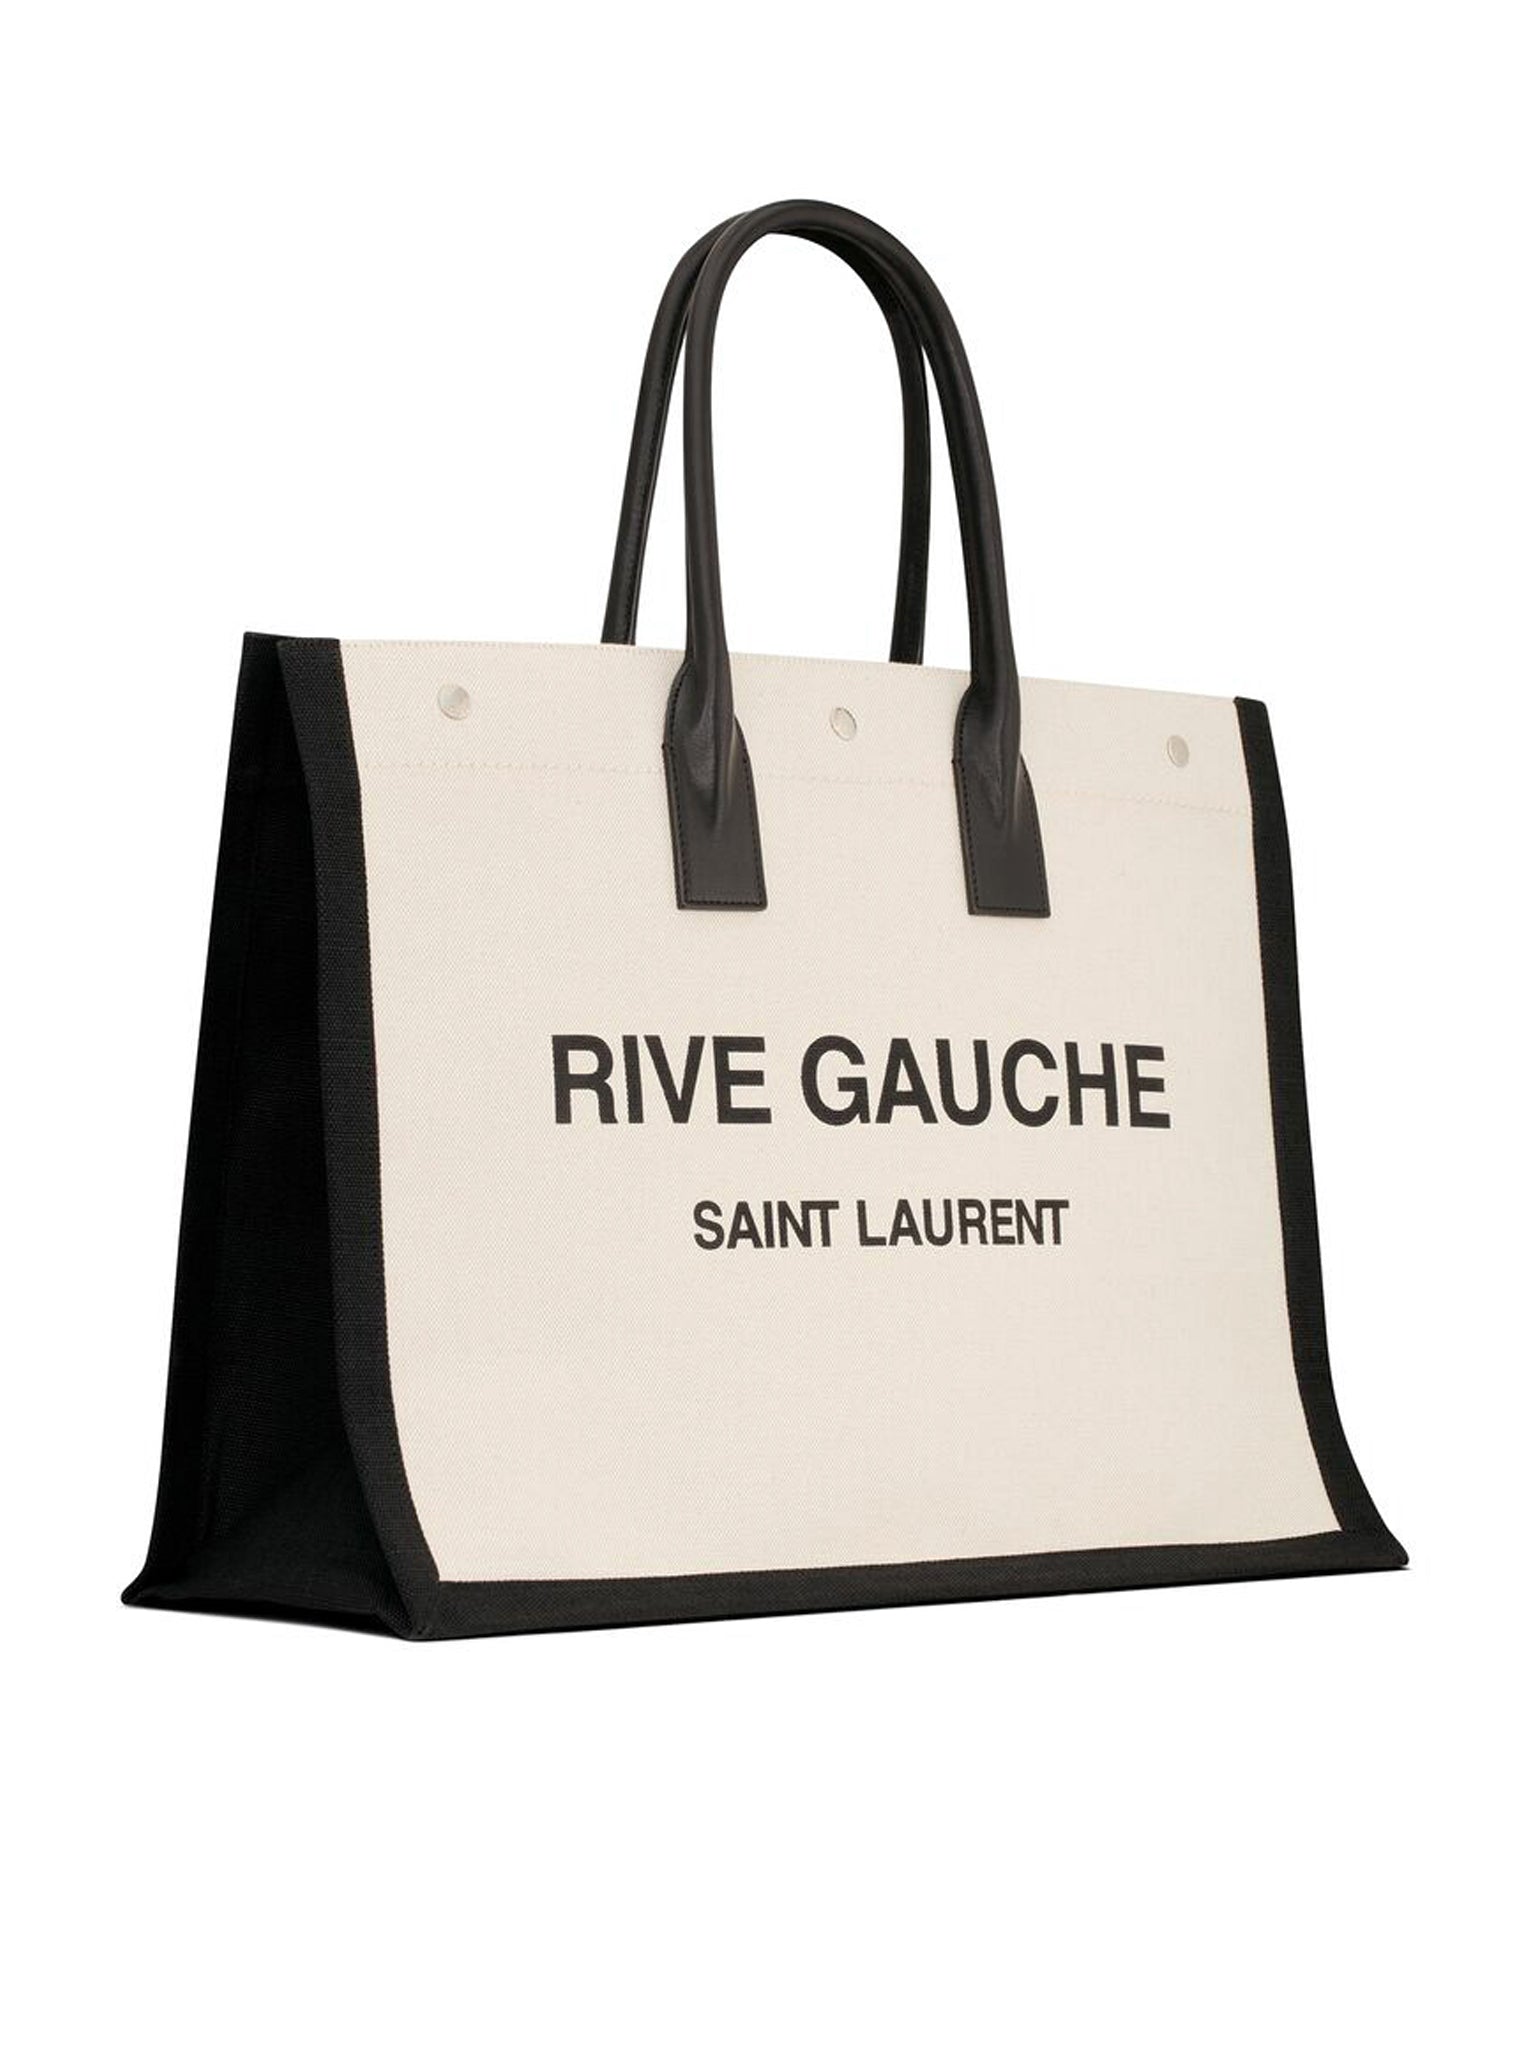 RIVE GAUCHE PRINTED TOTE BAG